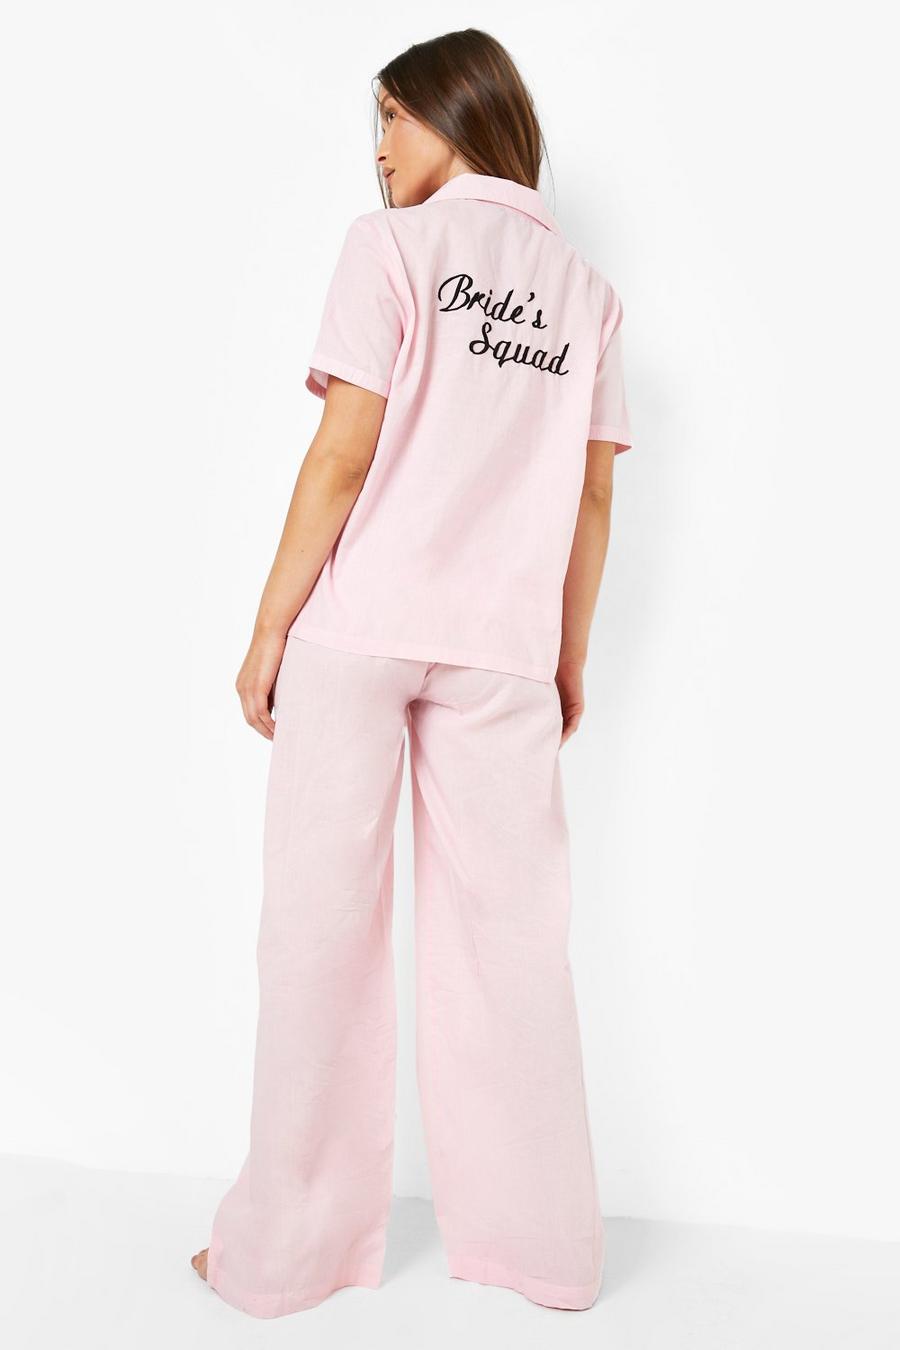 Blush rosa Cotton Bride's Squad Embroidery Trouser Set 